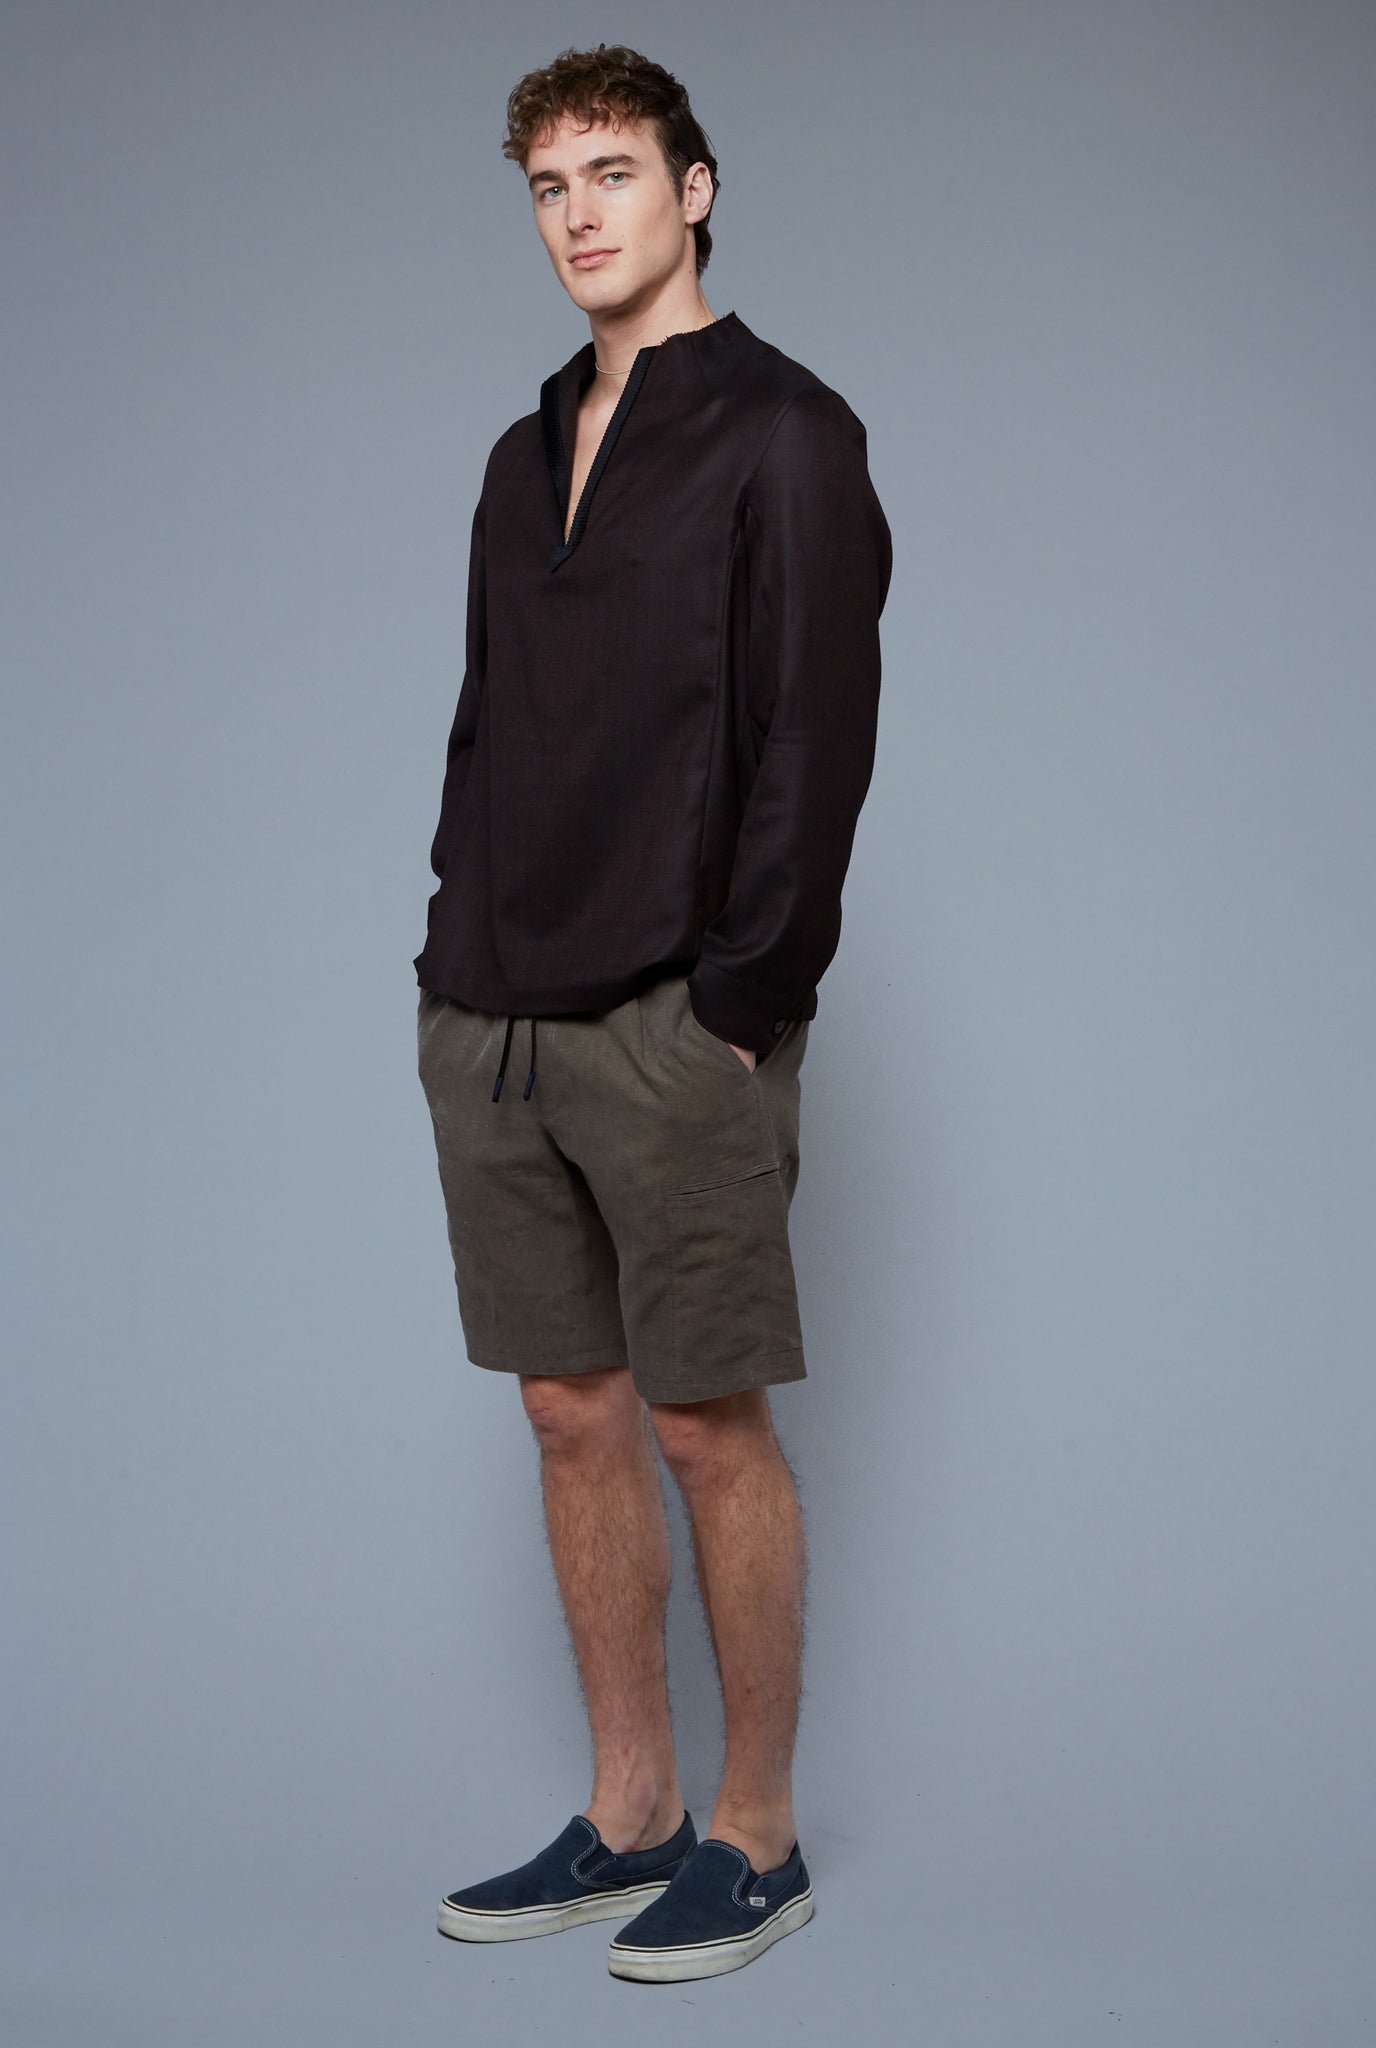 Three Quarter View: Model Hans Weiner wearing Royal Pullover